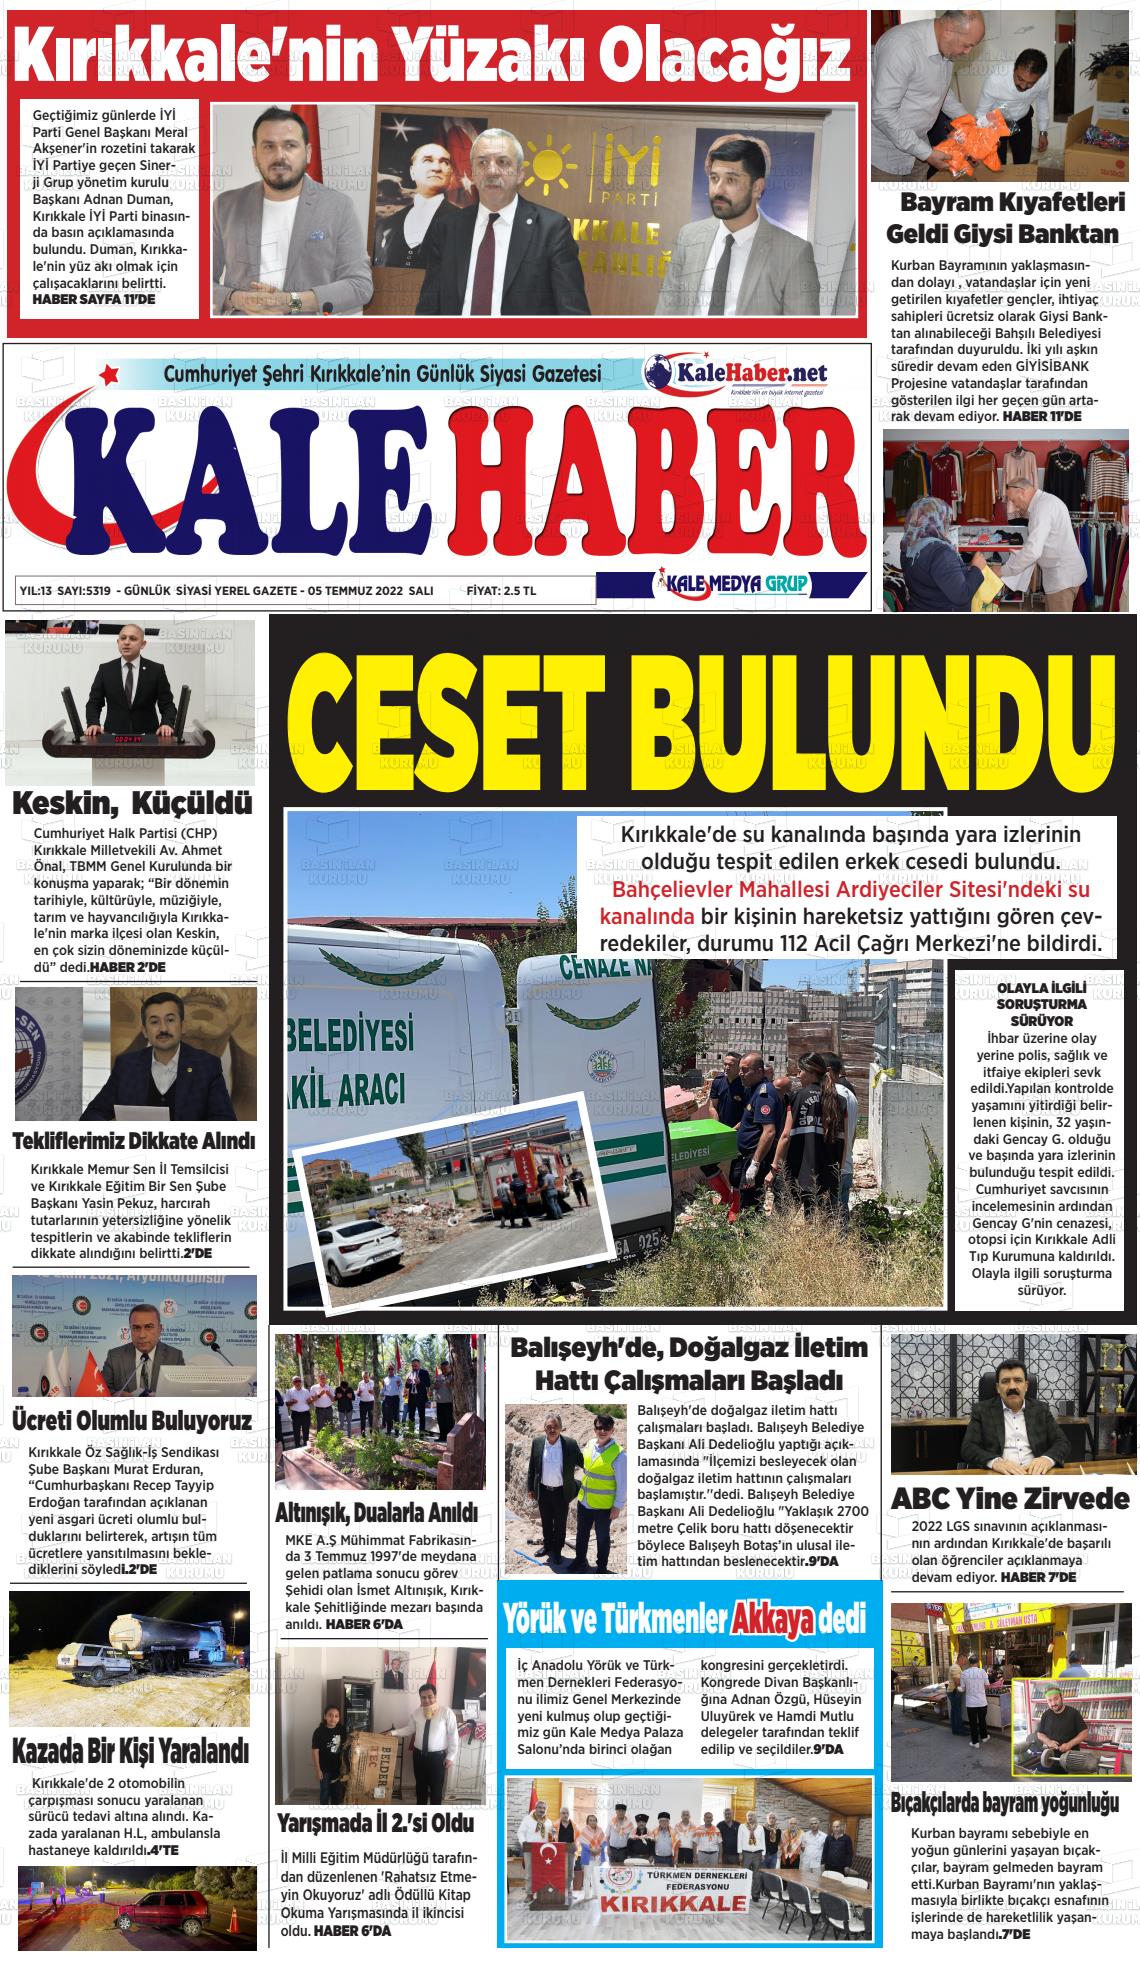 05 Temmuz 2022 Kale Haber Gazete Manşeti